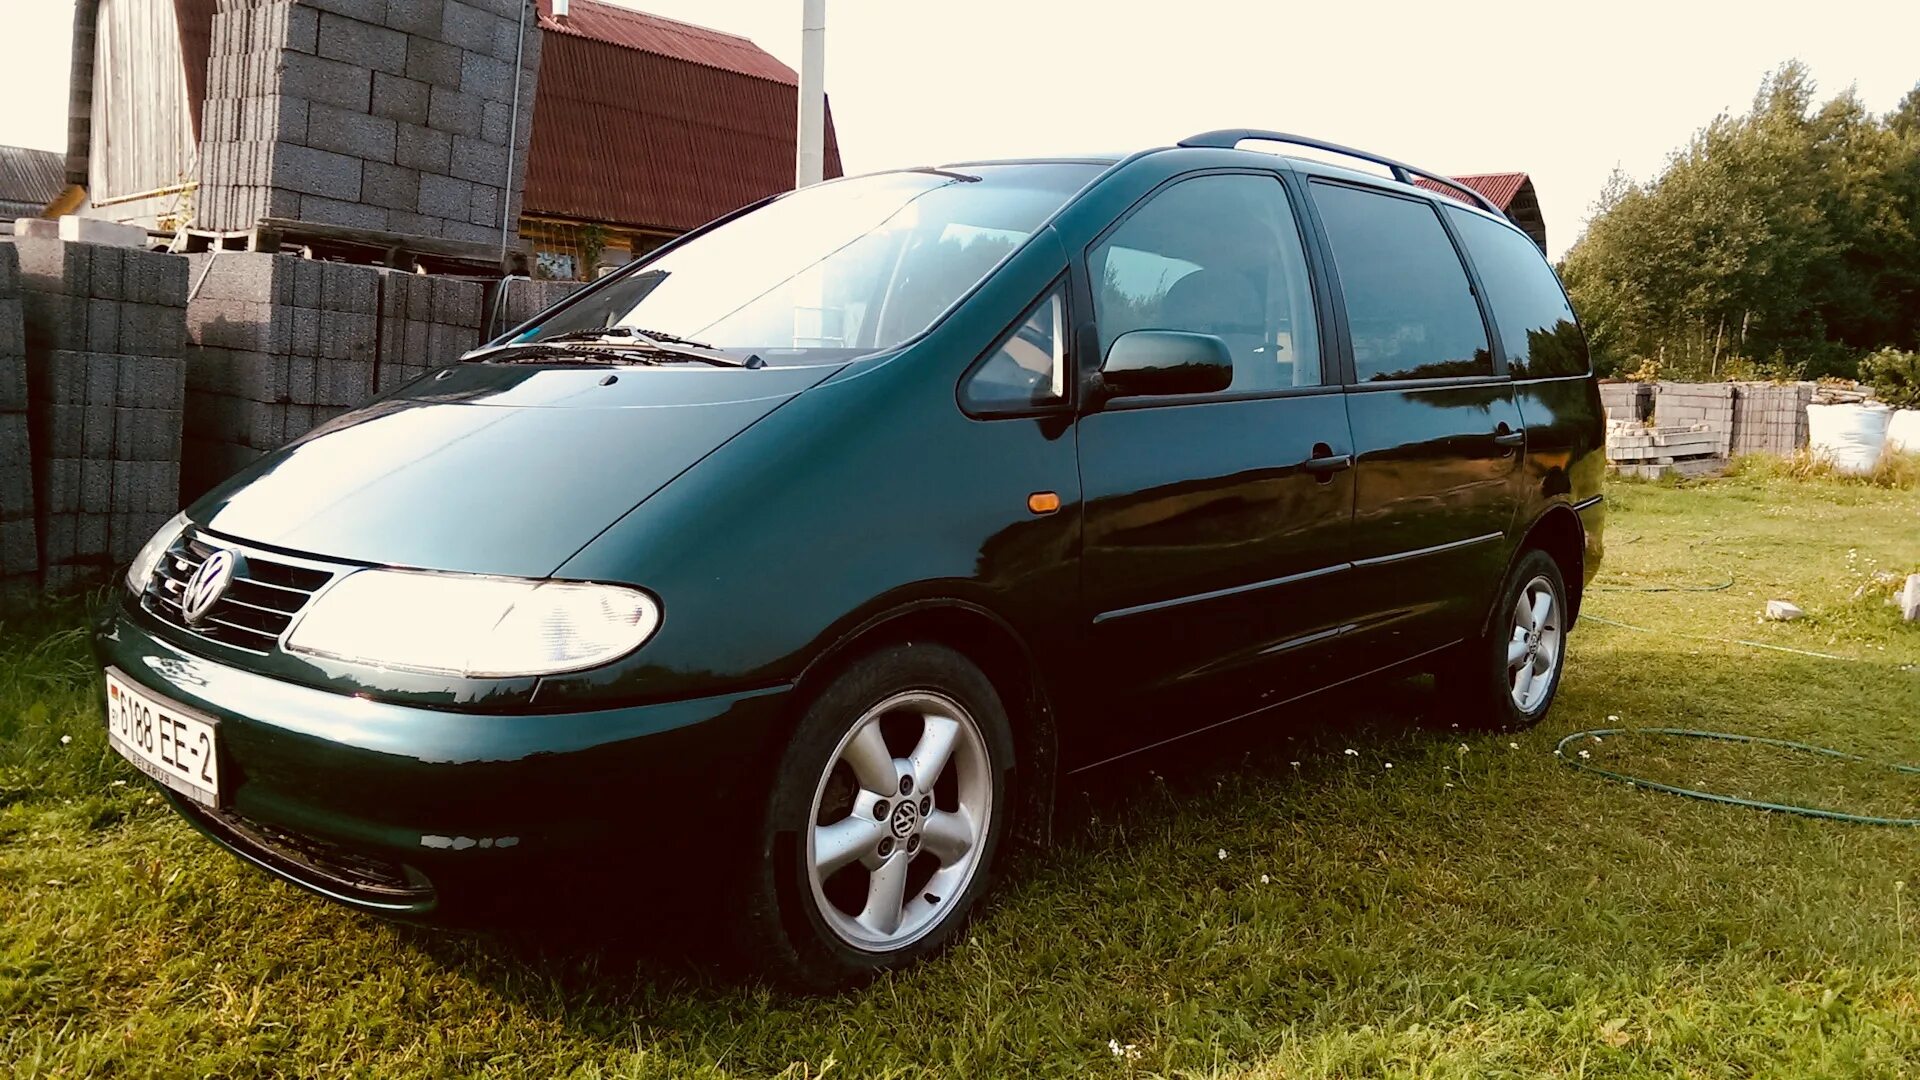 Volkswagen sharan 1.9. Фольксваген Шаран 1999. Фольксваген Шаран 1. Фольксваген Sharan 1999. Фольксваген Шаран 1998г.